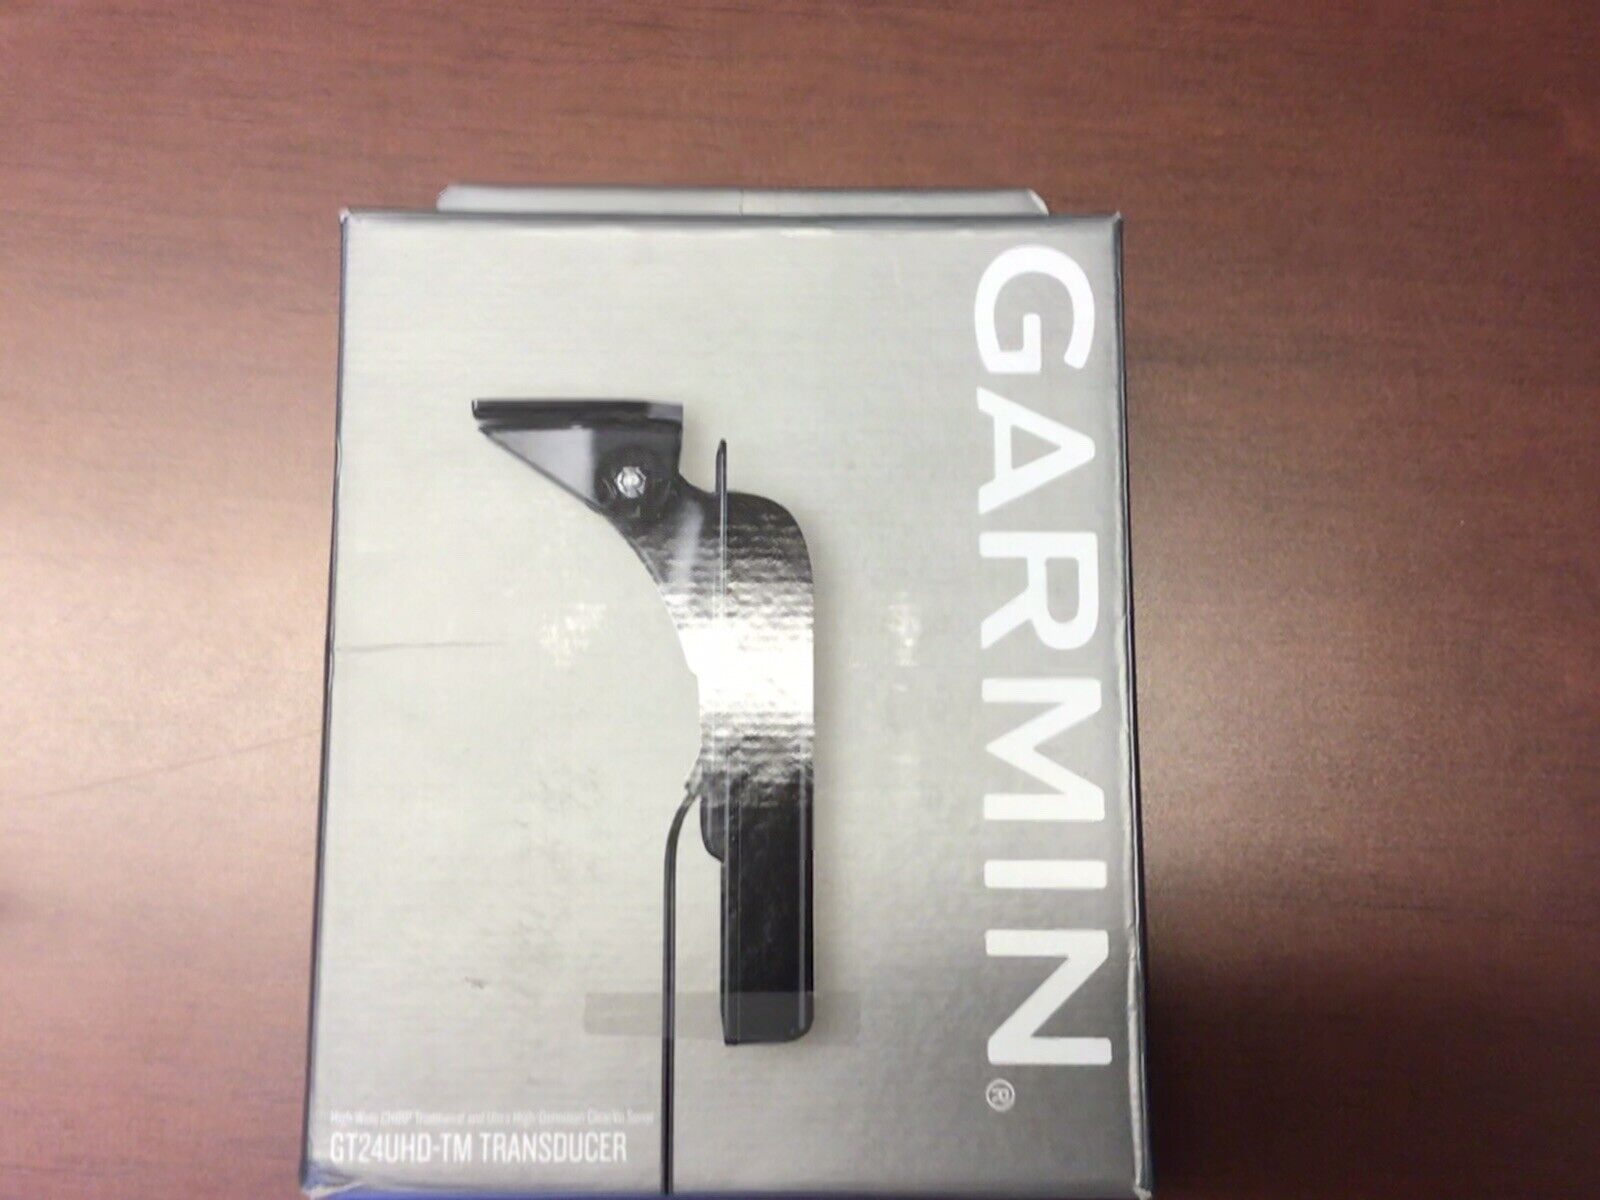 Garmin GT24UHD-TM Transducer